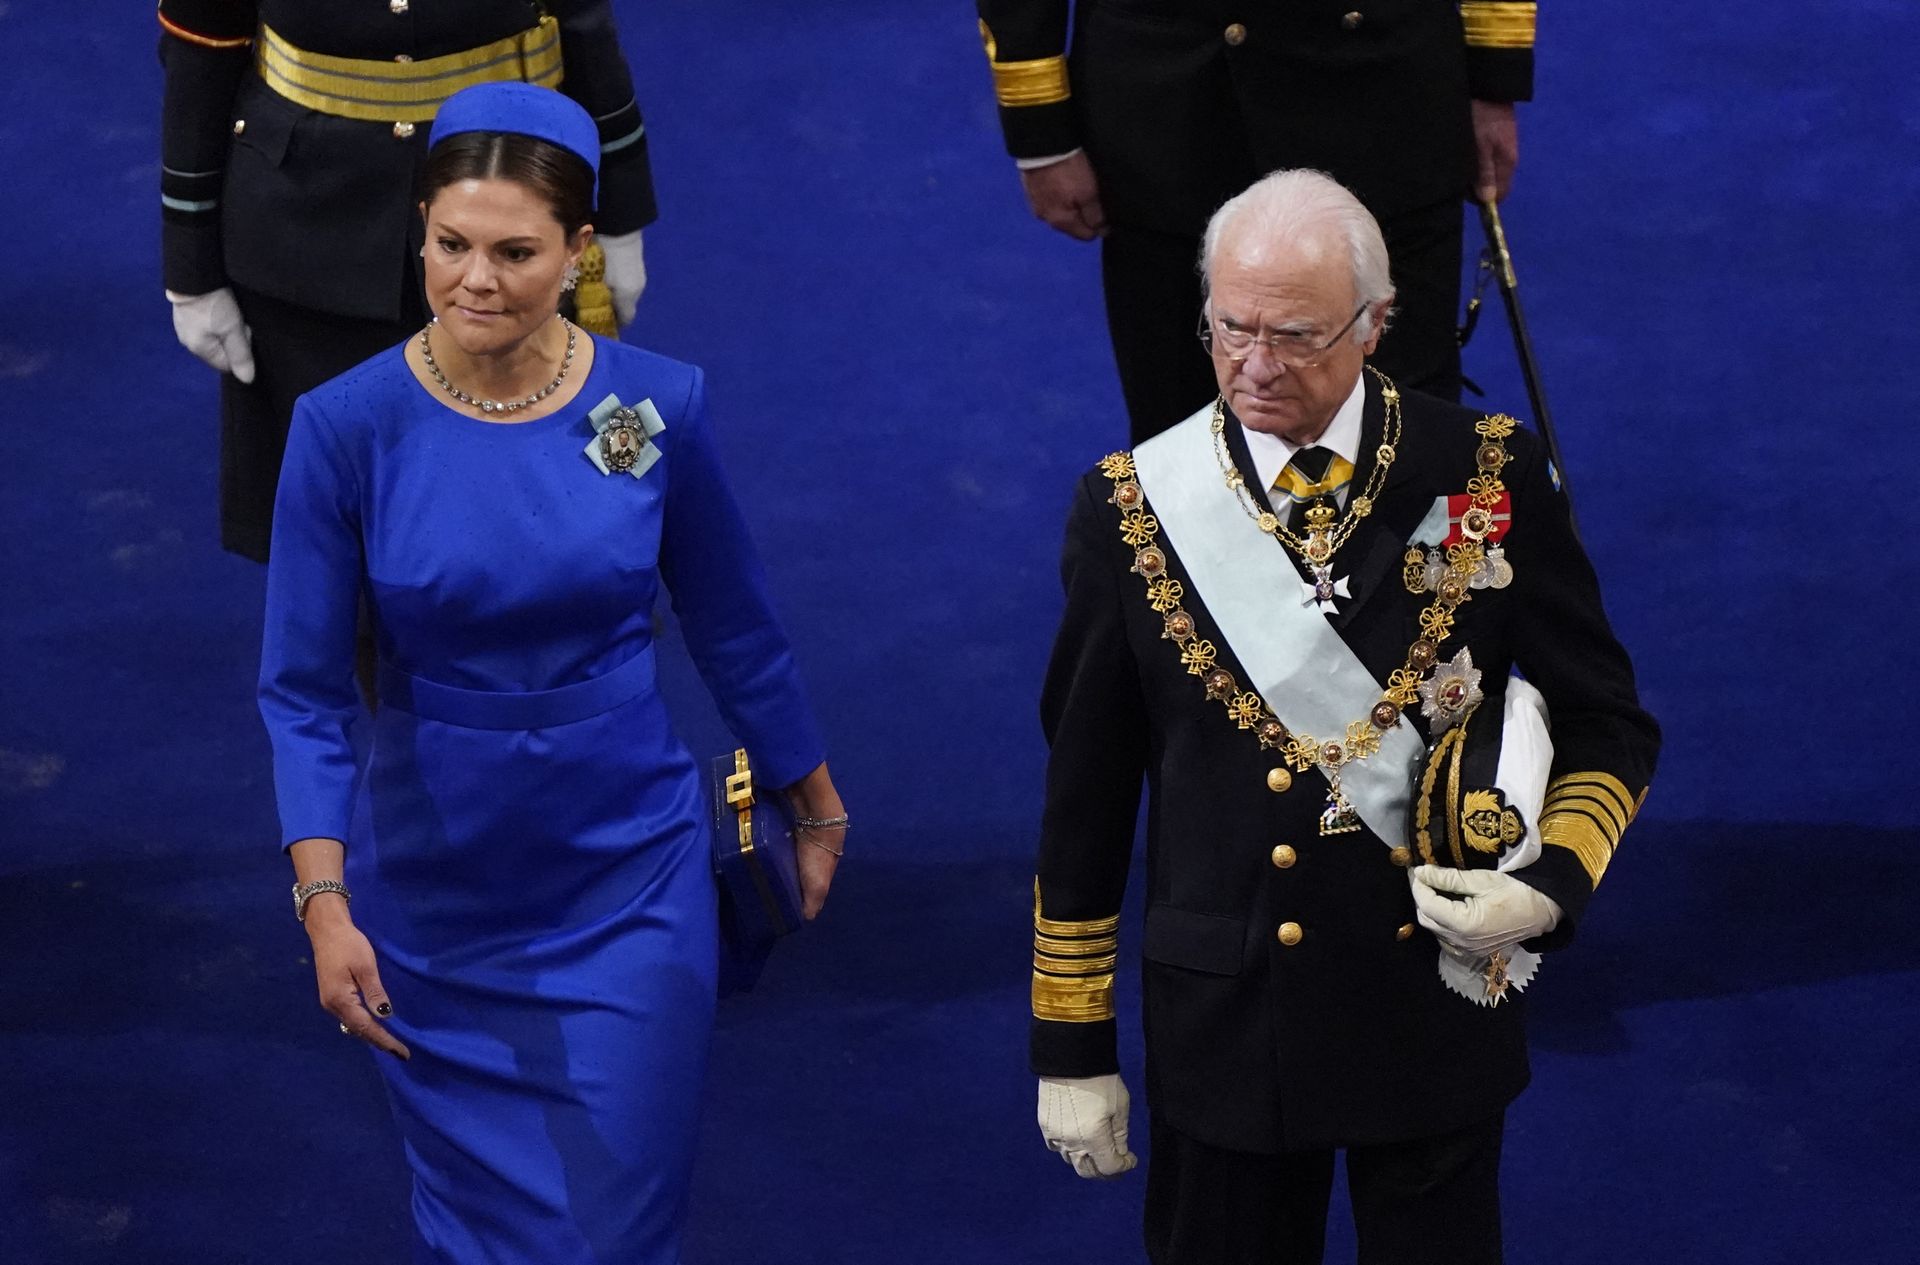 Koning Carl XVI Gustav en prinses Victoria